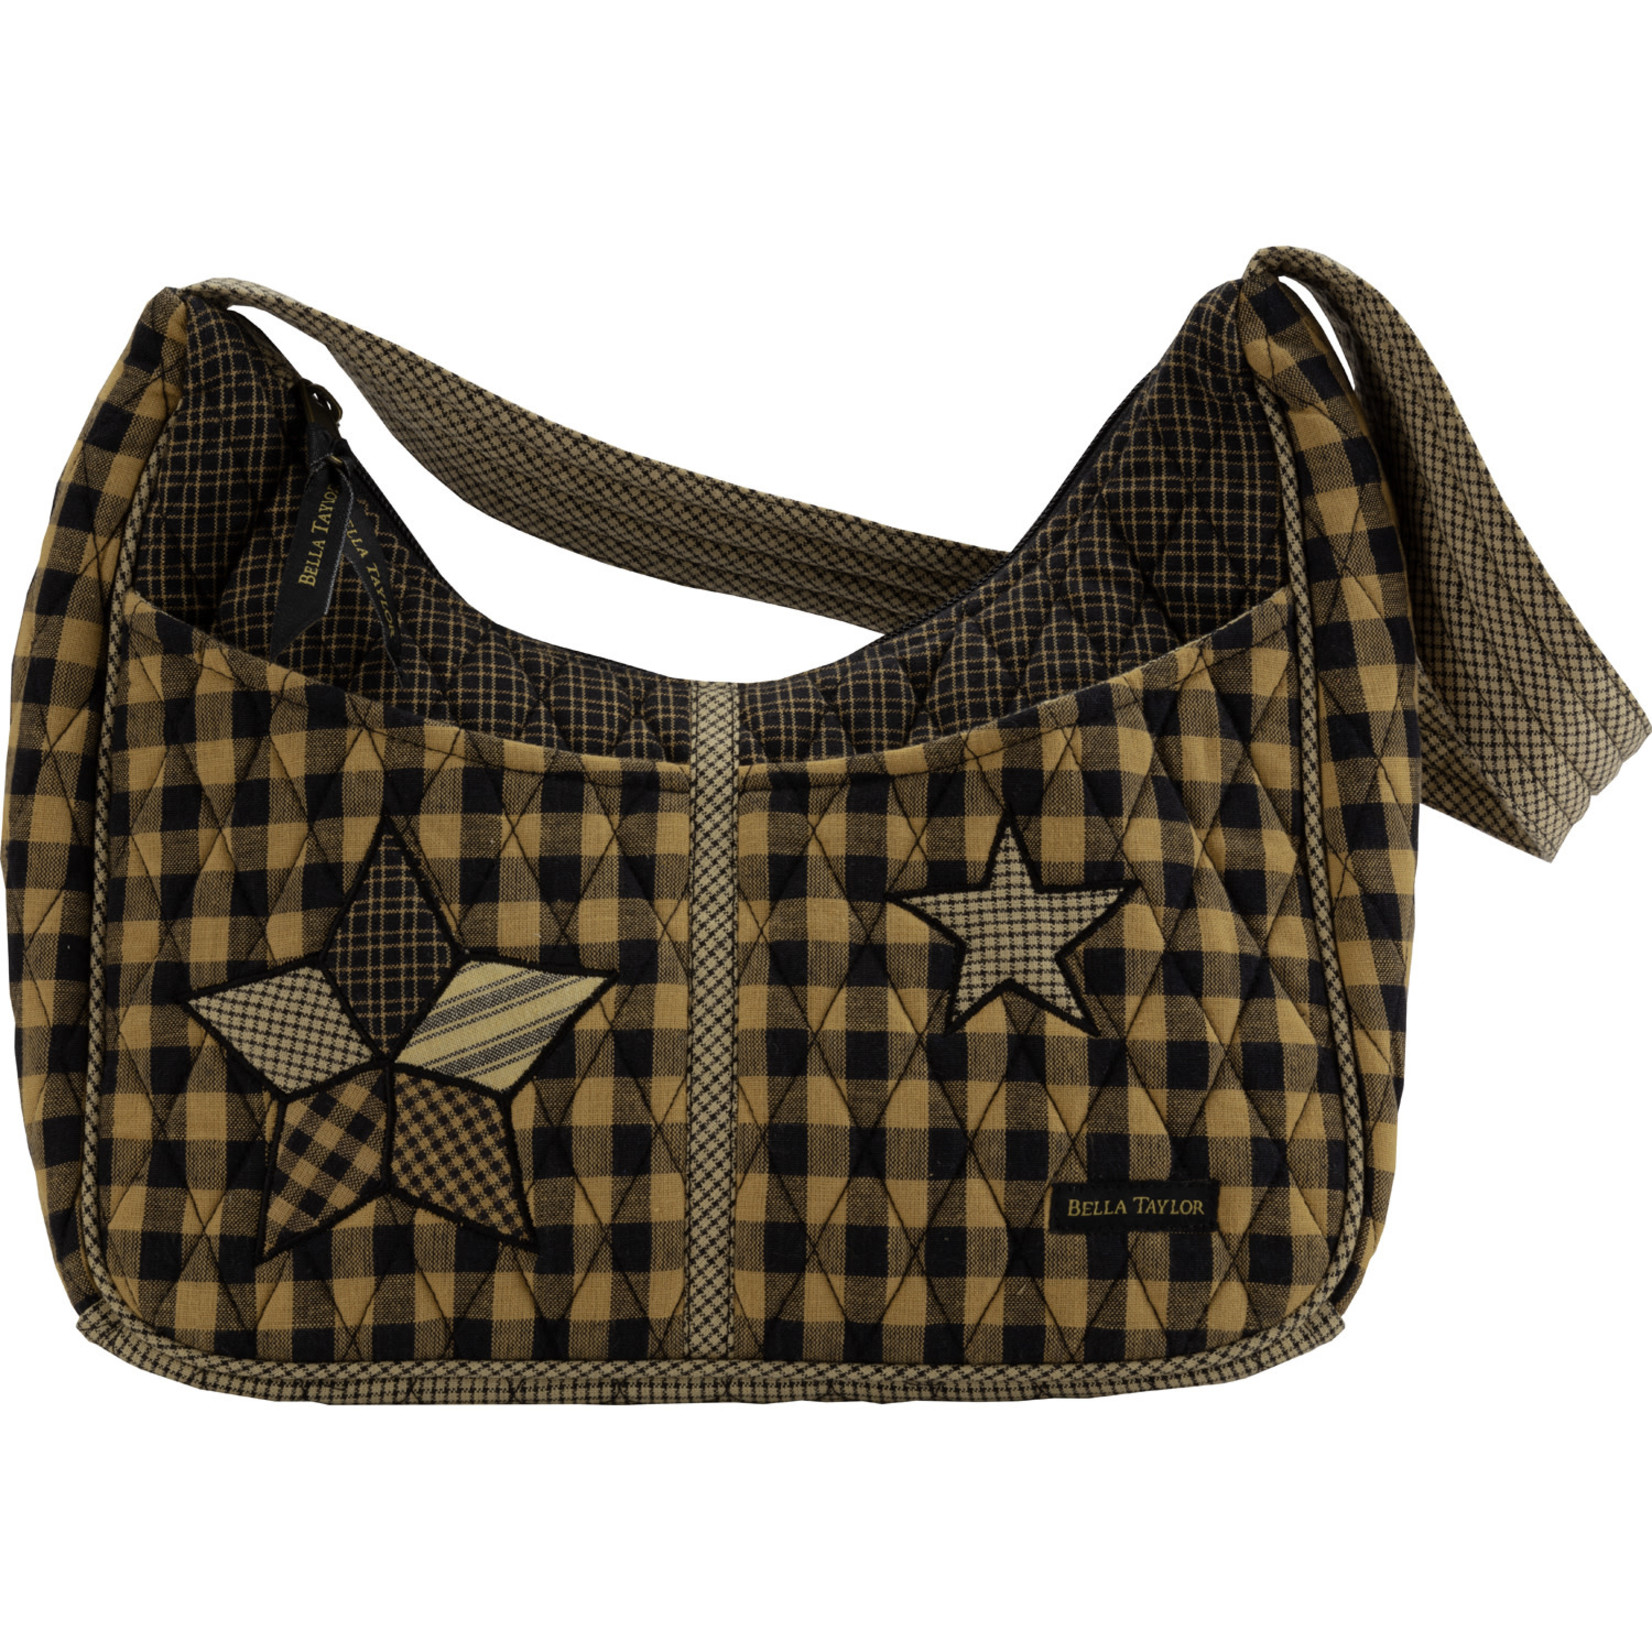 Bella Taylor Farmhouse Star - Blakely handbag